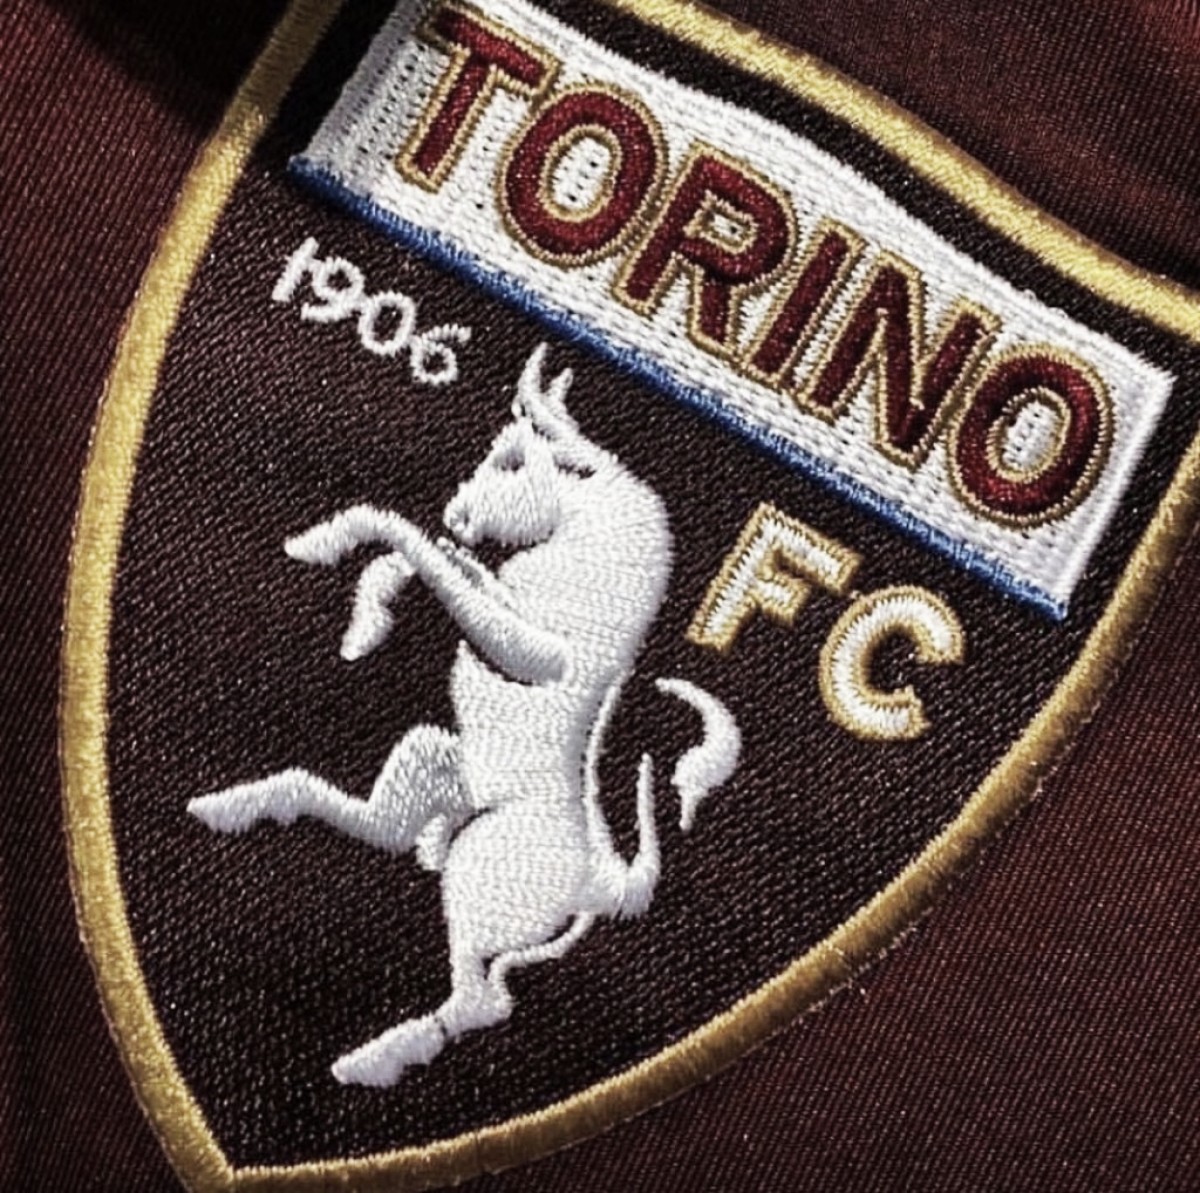 Torino presenta sus refuerzos